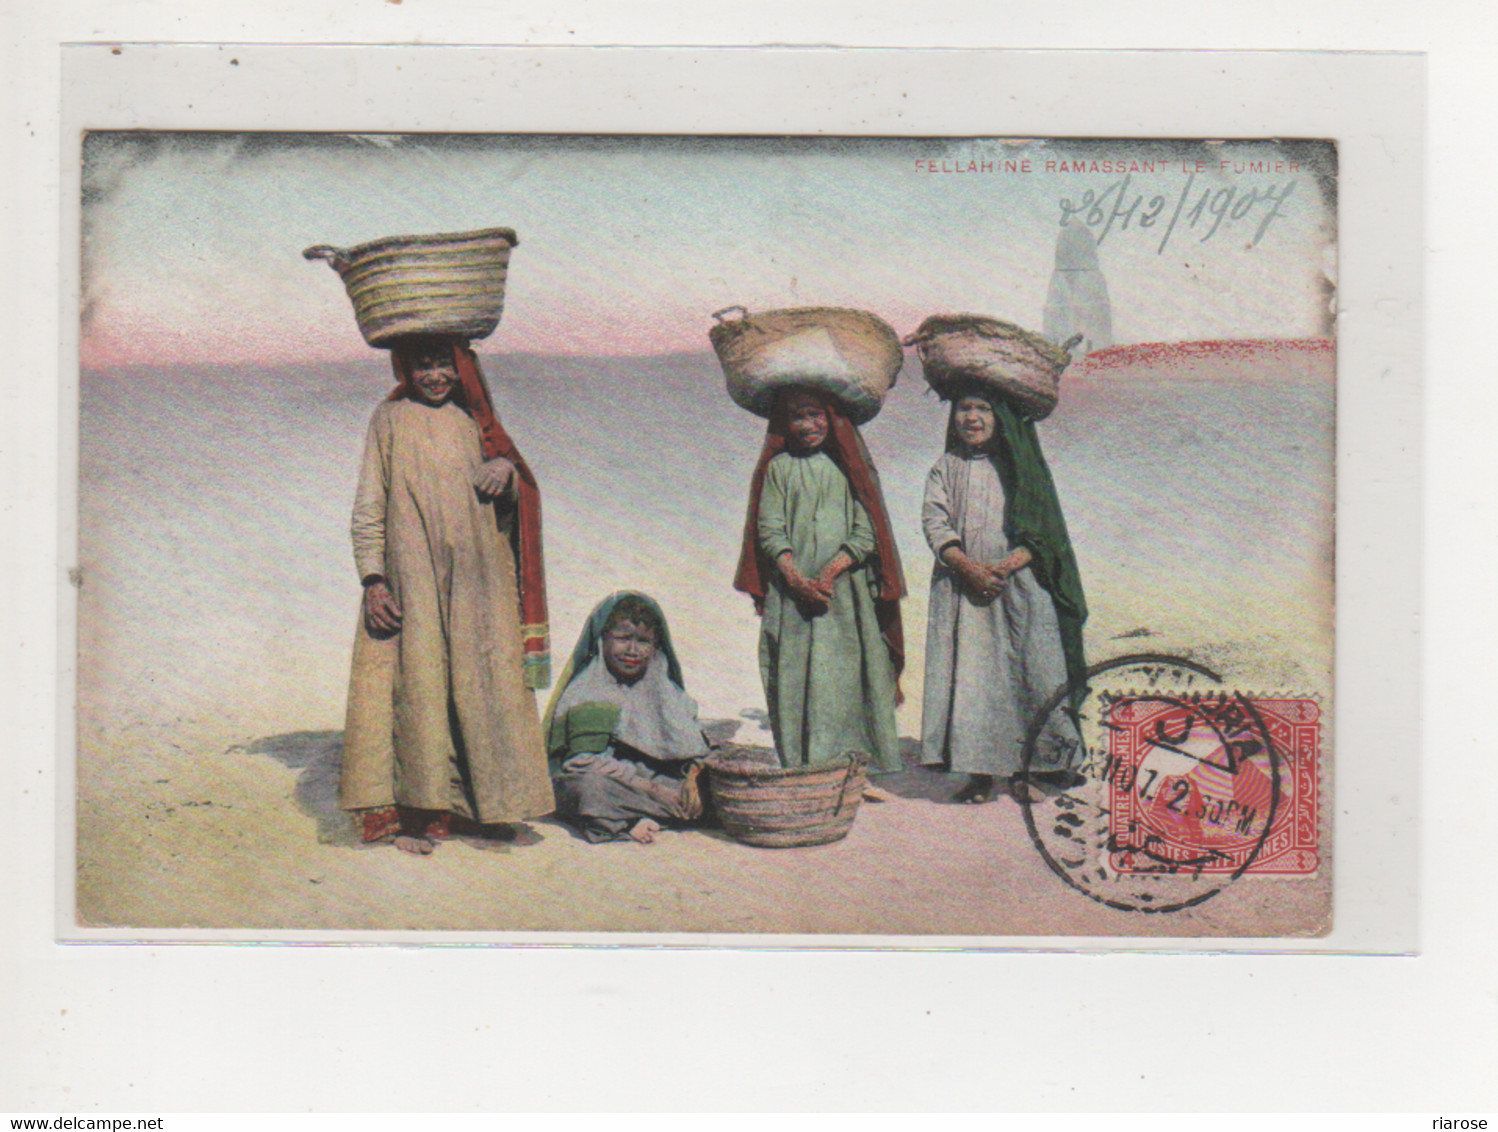 Antike Postkarte ÄGYPTEN FELLLAHINE RAMASSANT LE FUMIER - Disuk